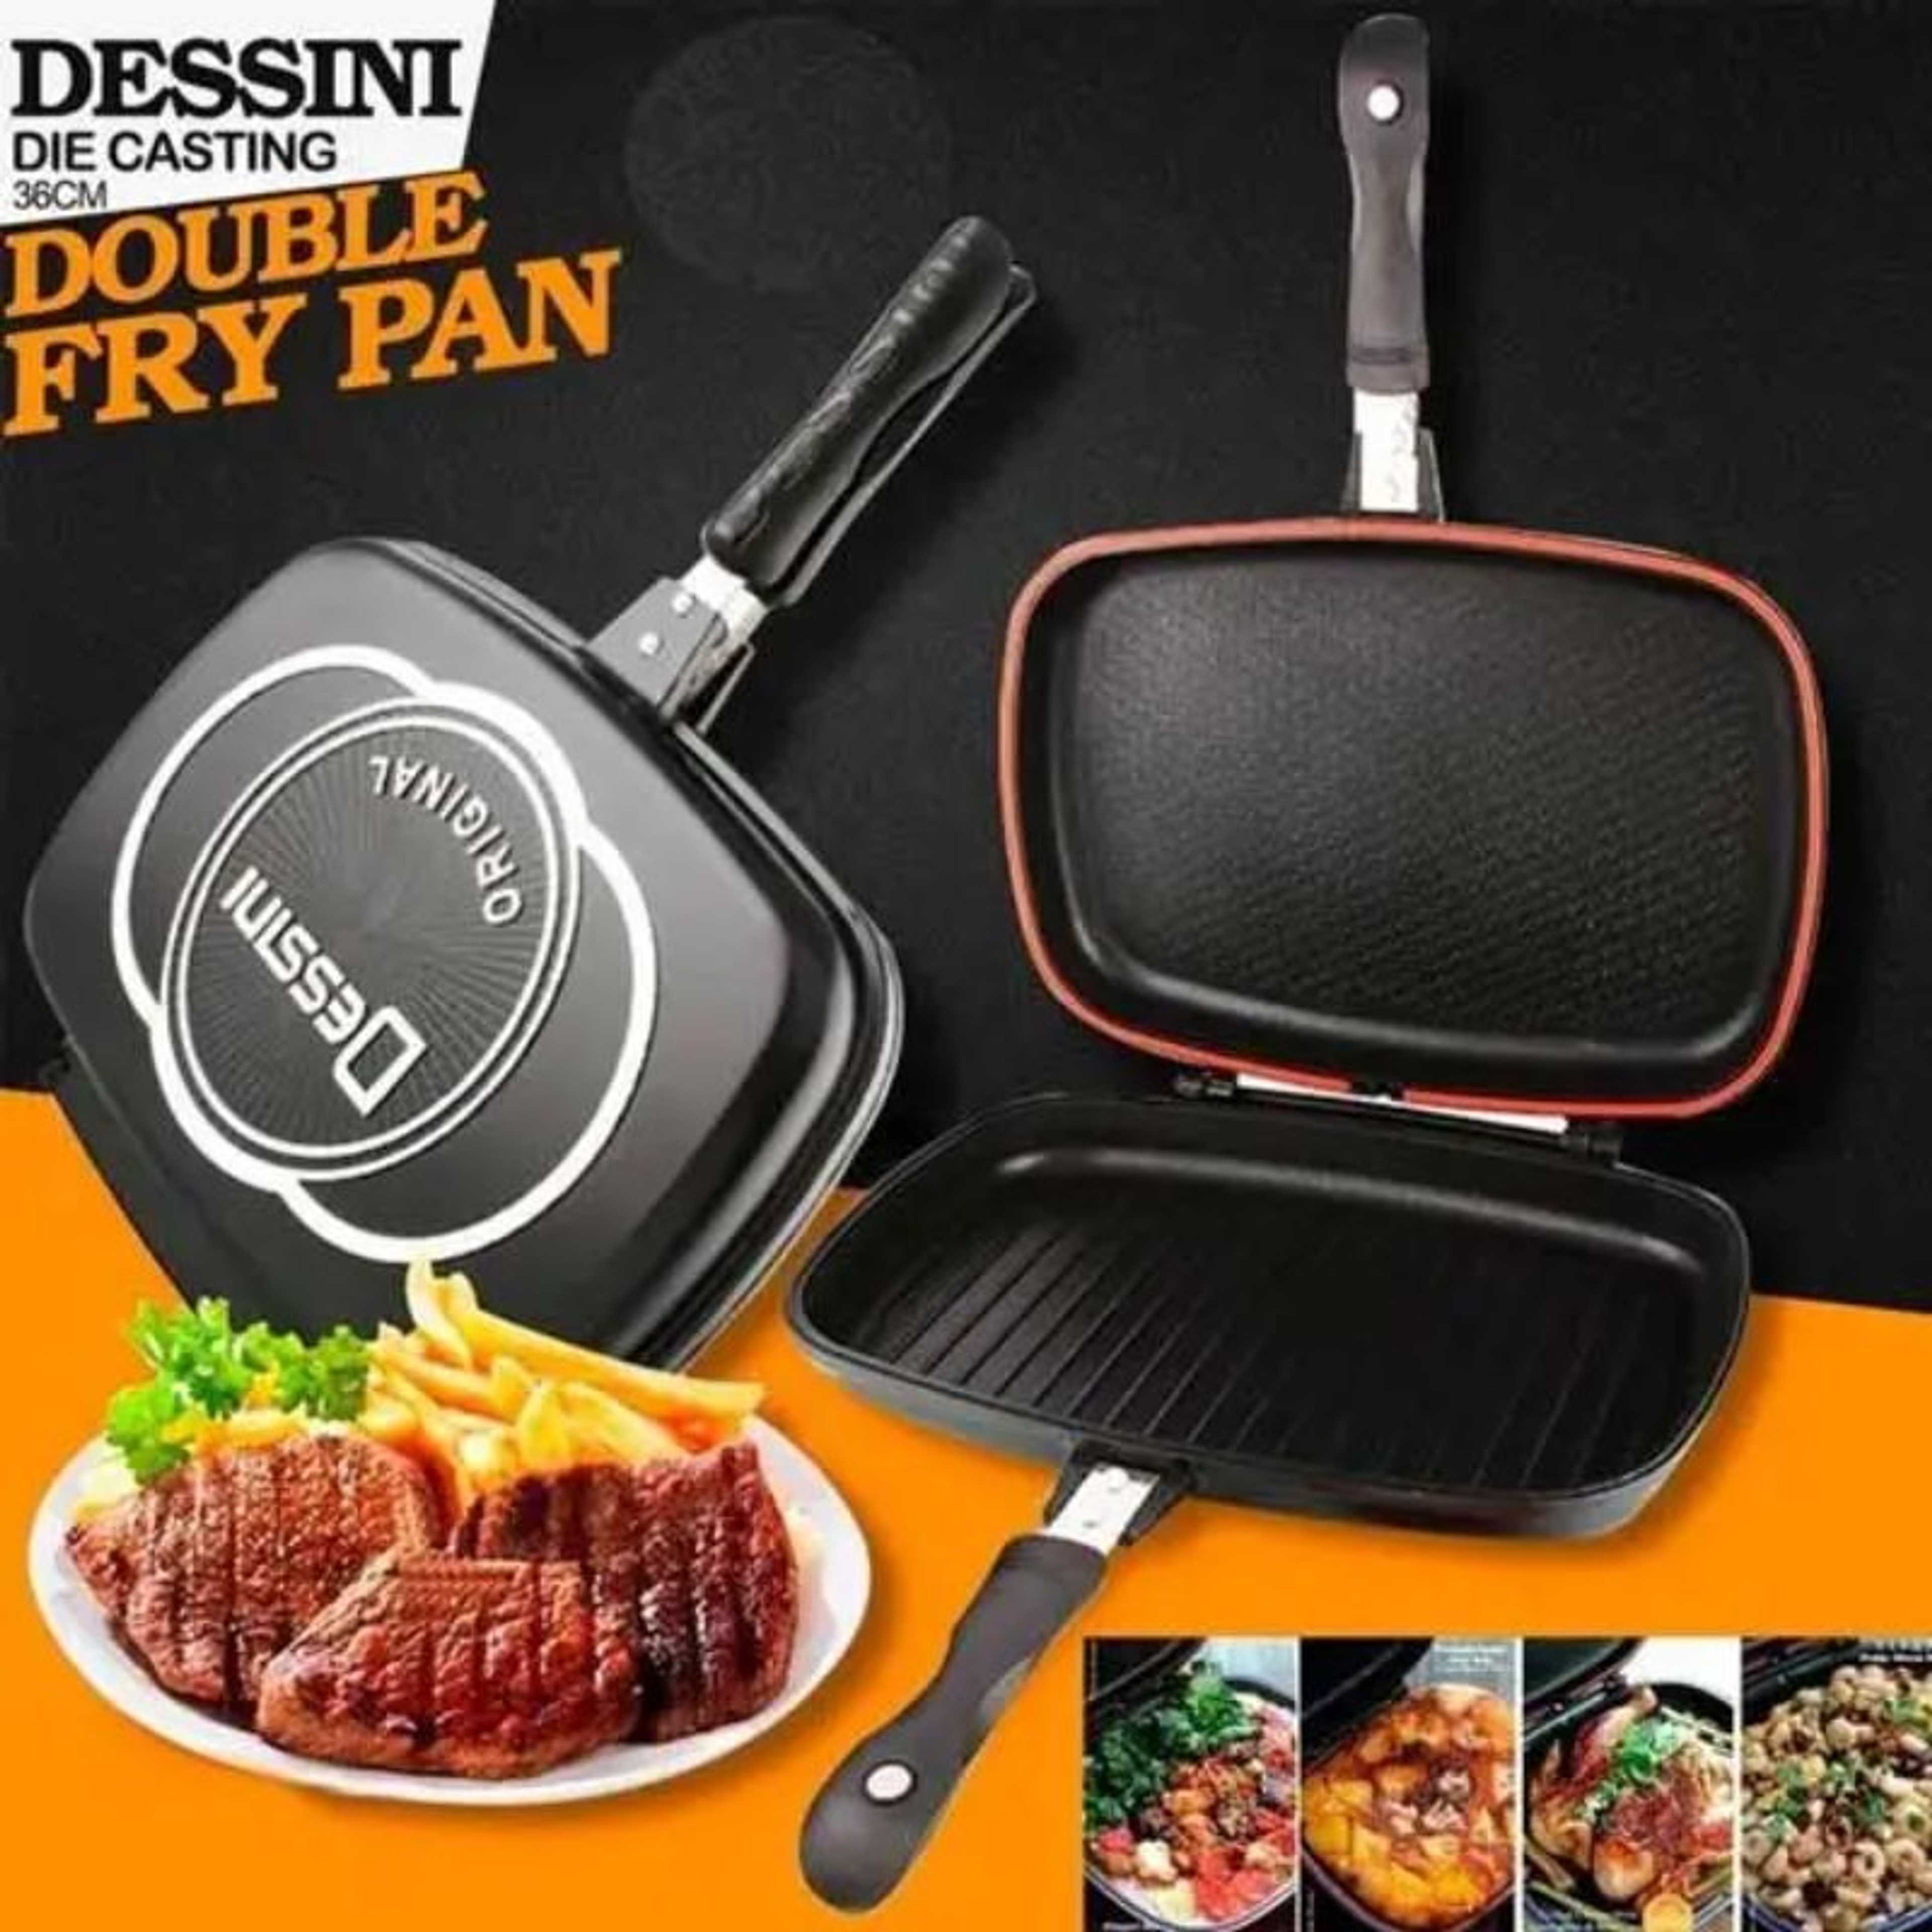 Dessini Original Die Casting Double Grill Pan